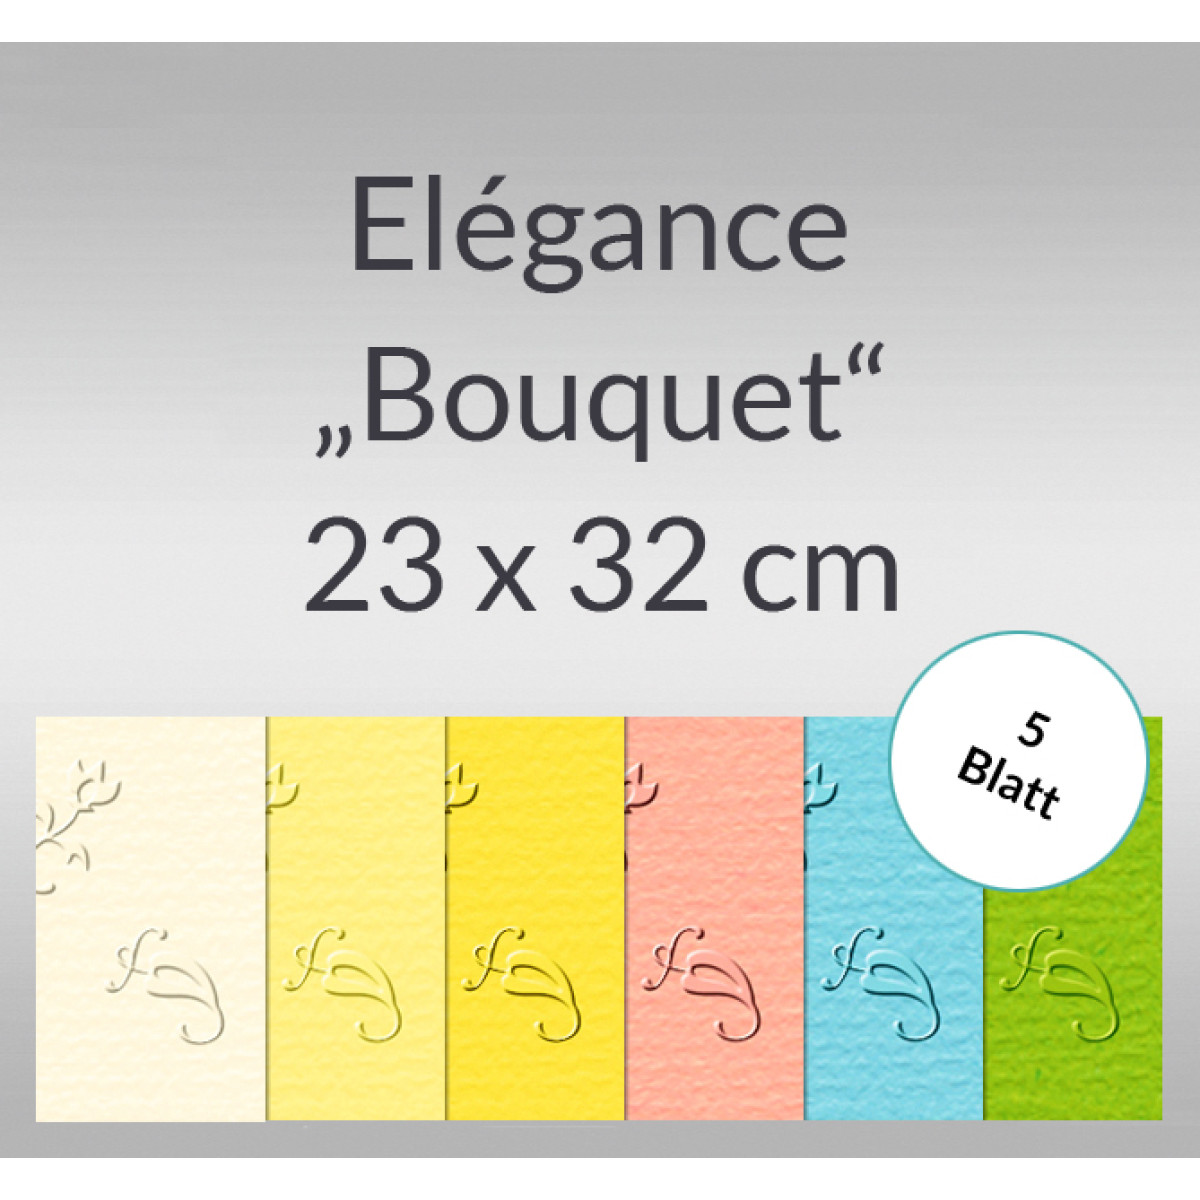 Elegance "Bouquet" 220 g/qm 23 x 32 cm - 5 Blatt